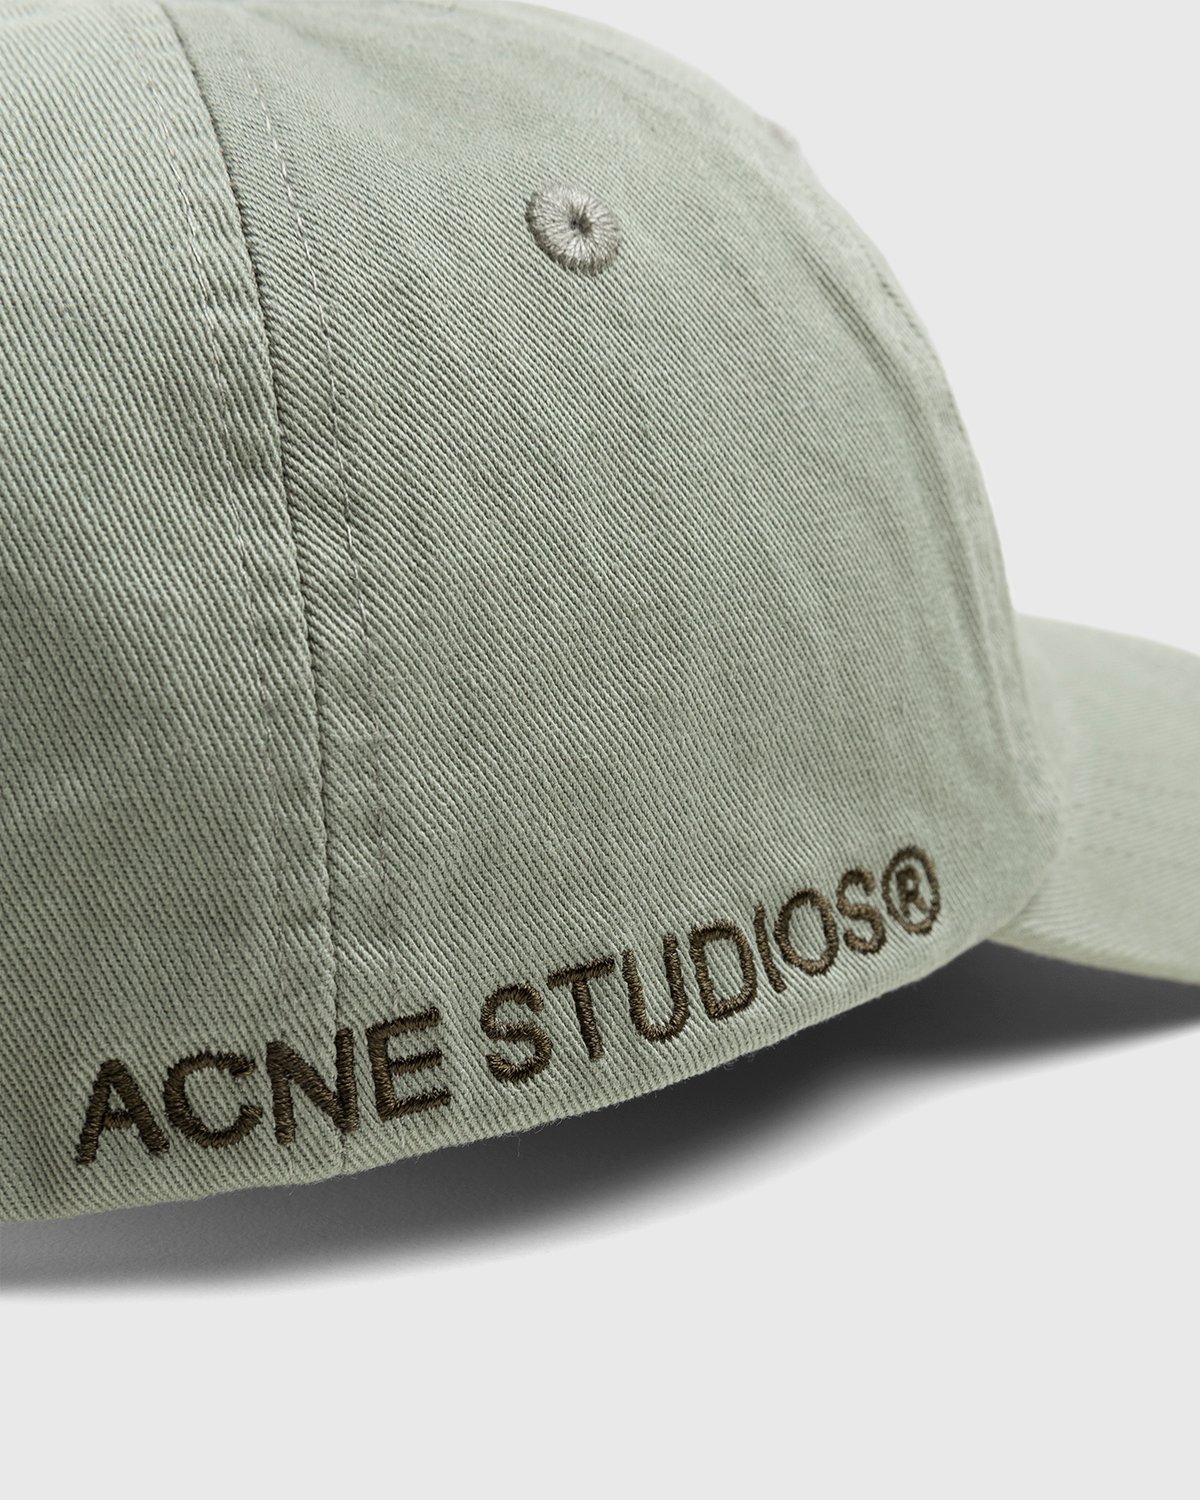 Acne Studios - Cotton Baseball Cap Sage Green - Accessories - Green - Image 5